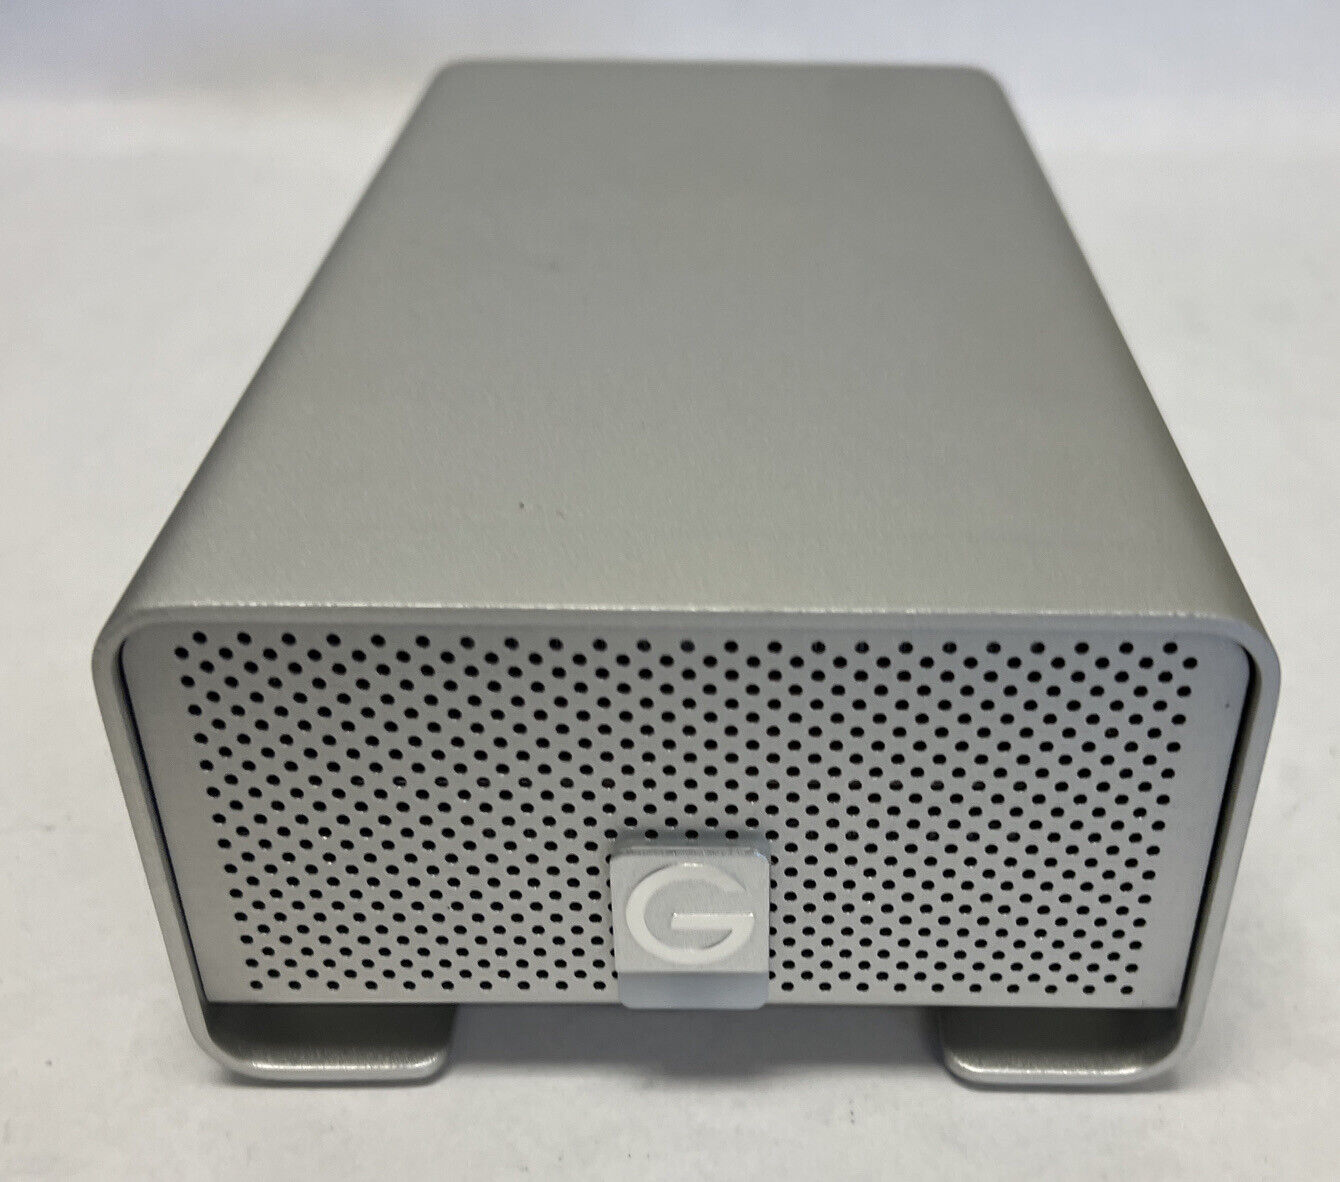 G-Technology 4TB G-RAID External Dual-Drive Storage System 0g02484 usb 3.0 fw